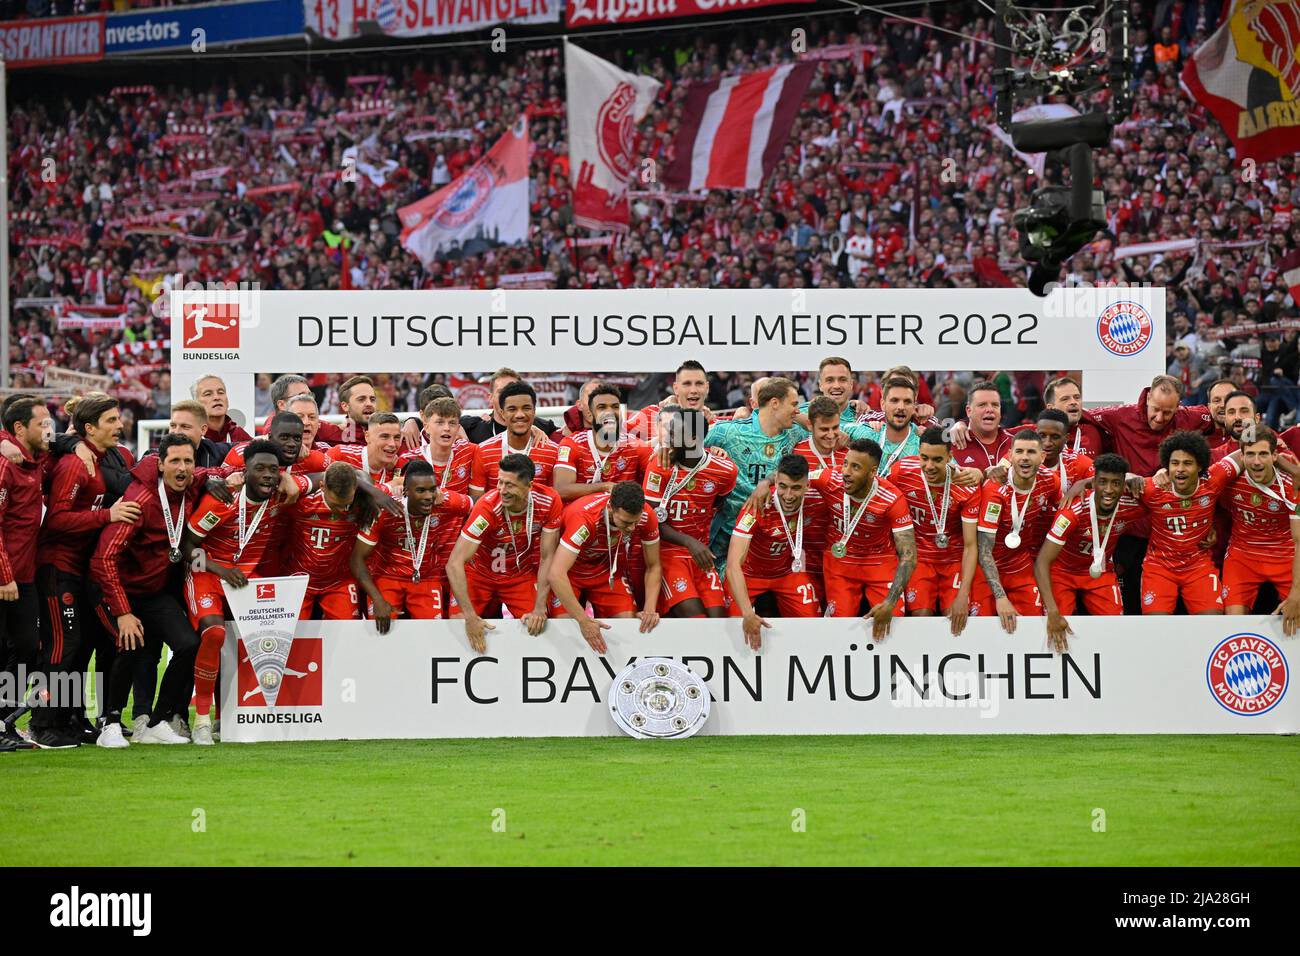 Championship celebration, handing over the trophy, team photo FC Bayern FCB, Allianz Arena, Munich, Bavaria, Germany Stock Photo